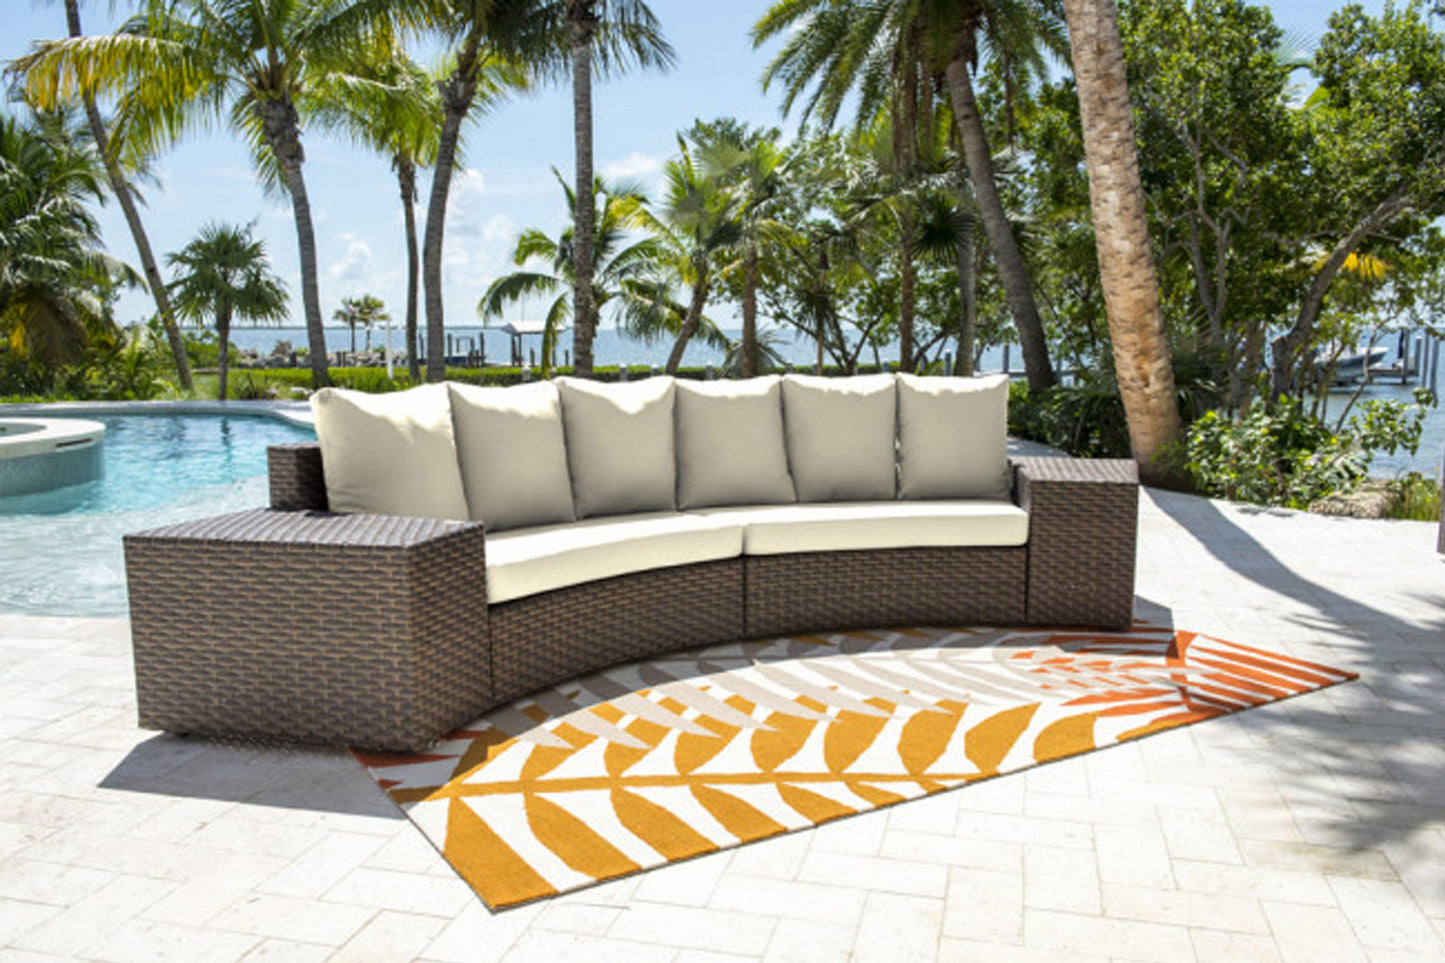 Big Sur 4 PC Sectional Set w/off-white cushions - Venini Furniture 